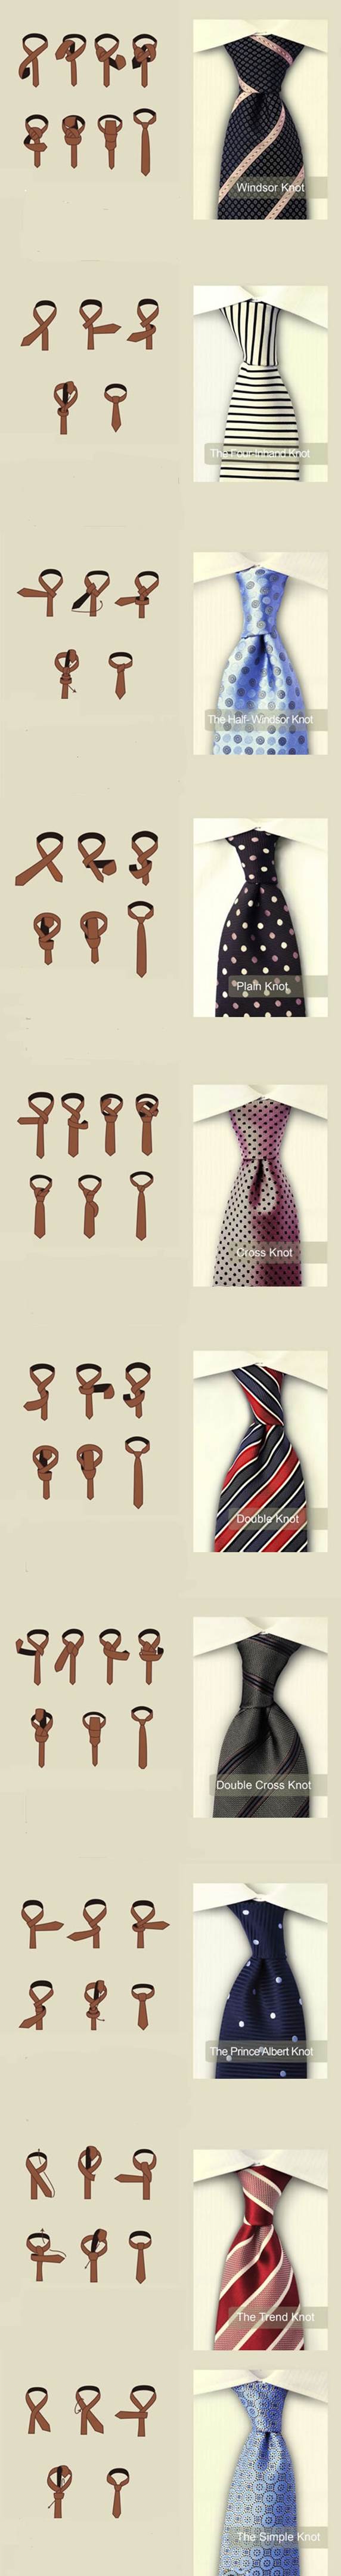 10-Ways-to-Tie-a-Tie-All